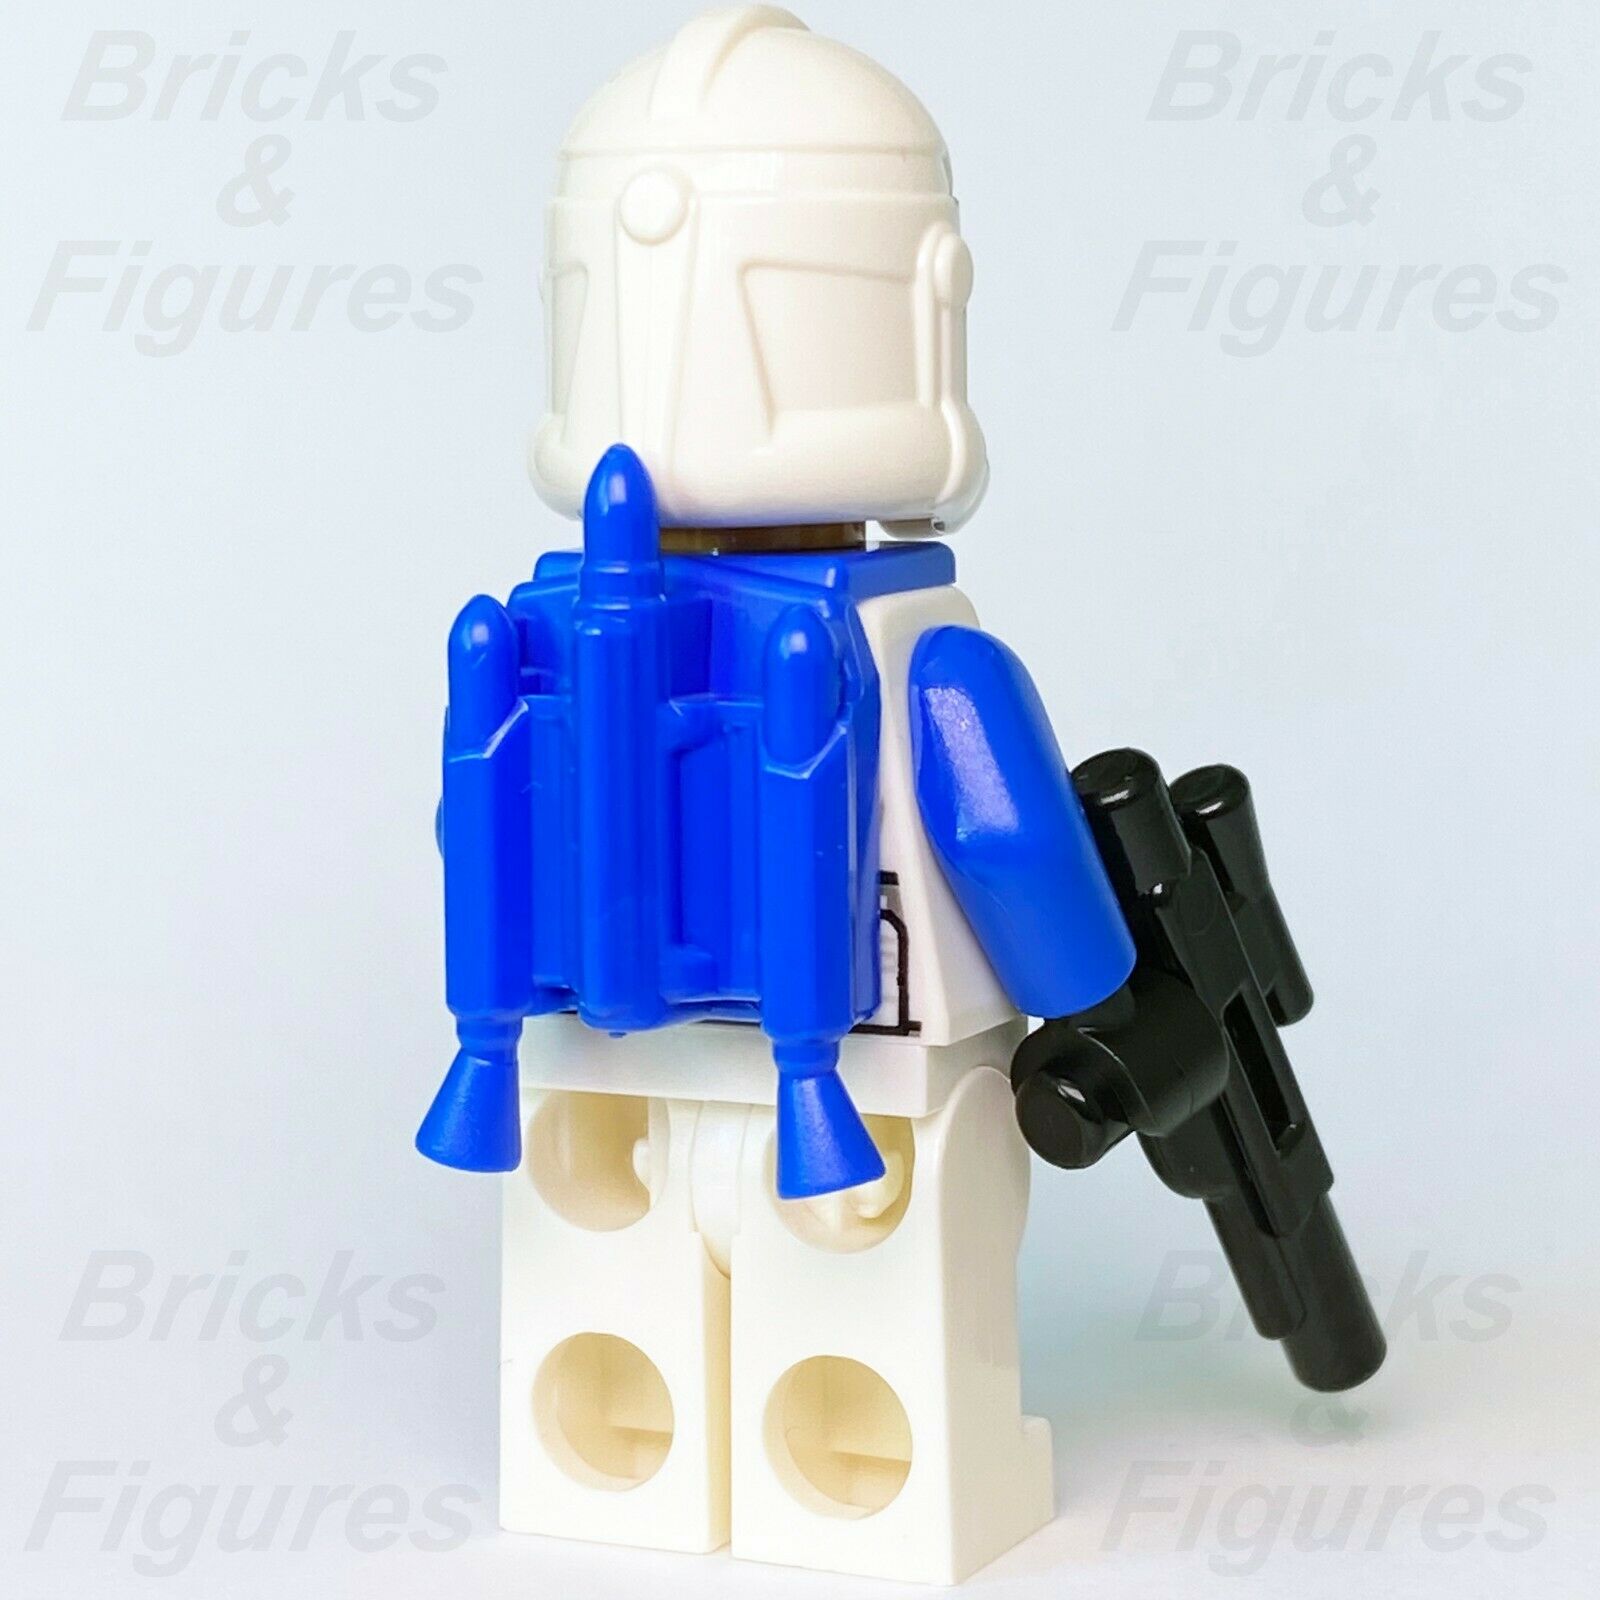 New Star Wars LEGO 501st Legion Clone Jet Trooper Episode 3 Minifigure 75280 - Bricks & Figures